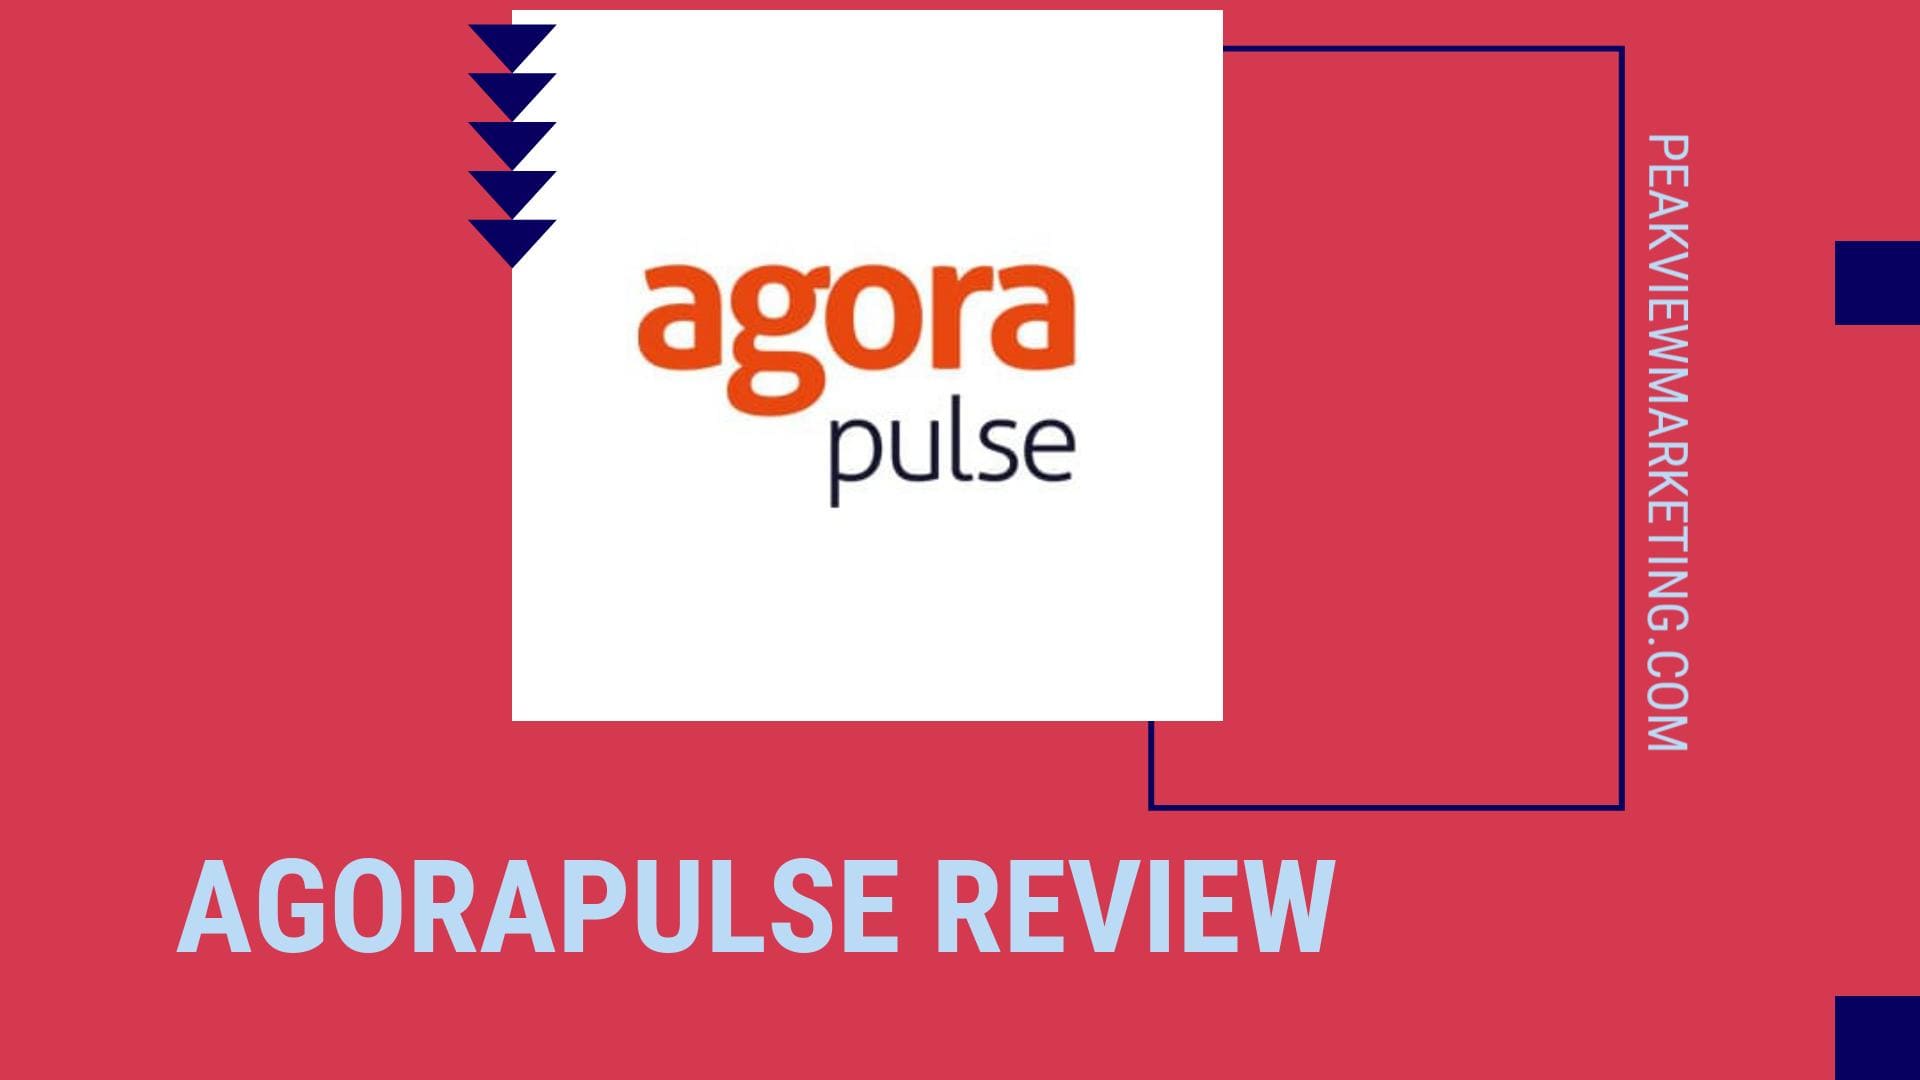 Agorapulse Review Image